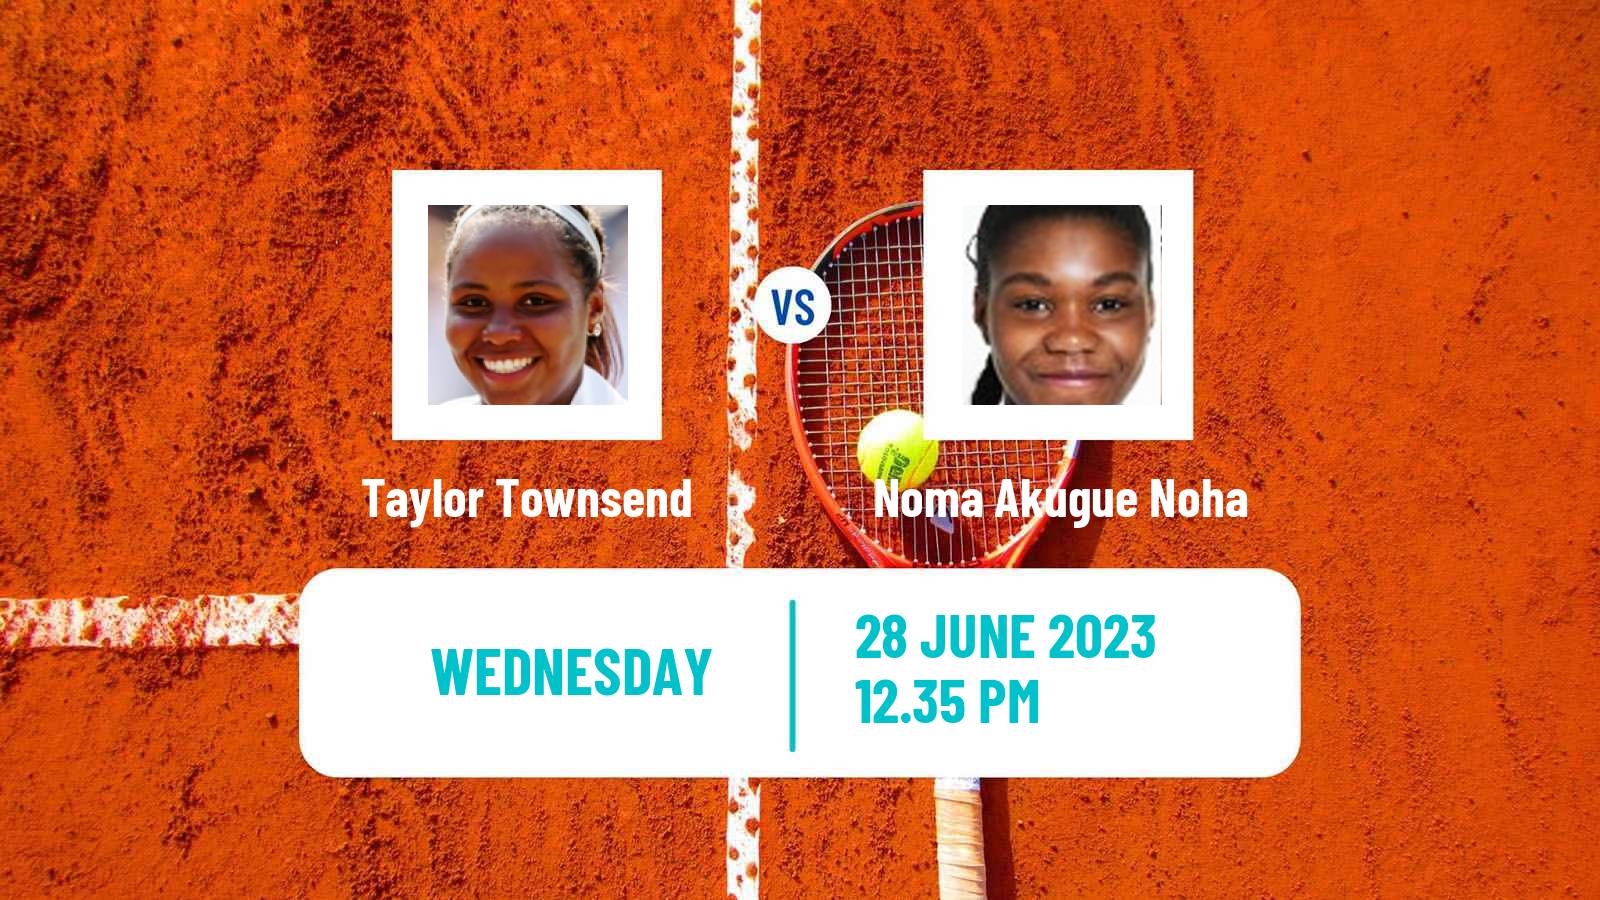 Tennis WTA Wimbledon Taylor Townsend - Noma Akugue Noha